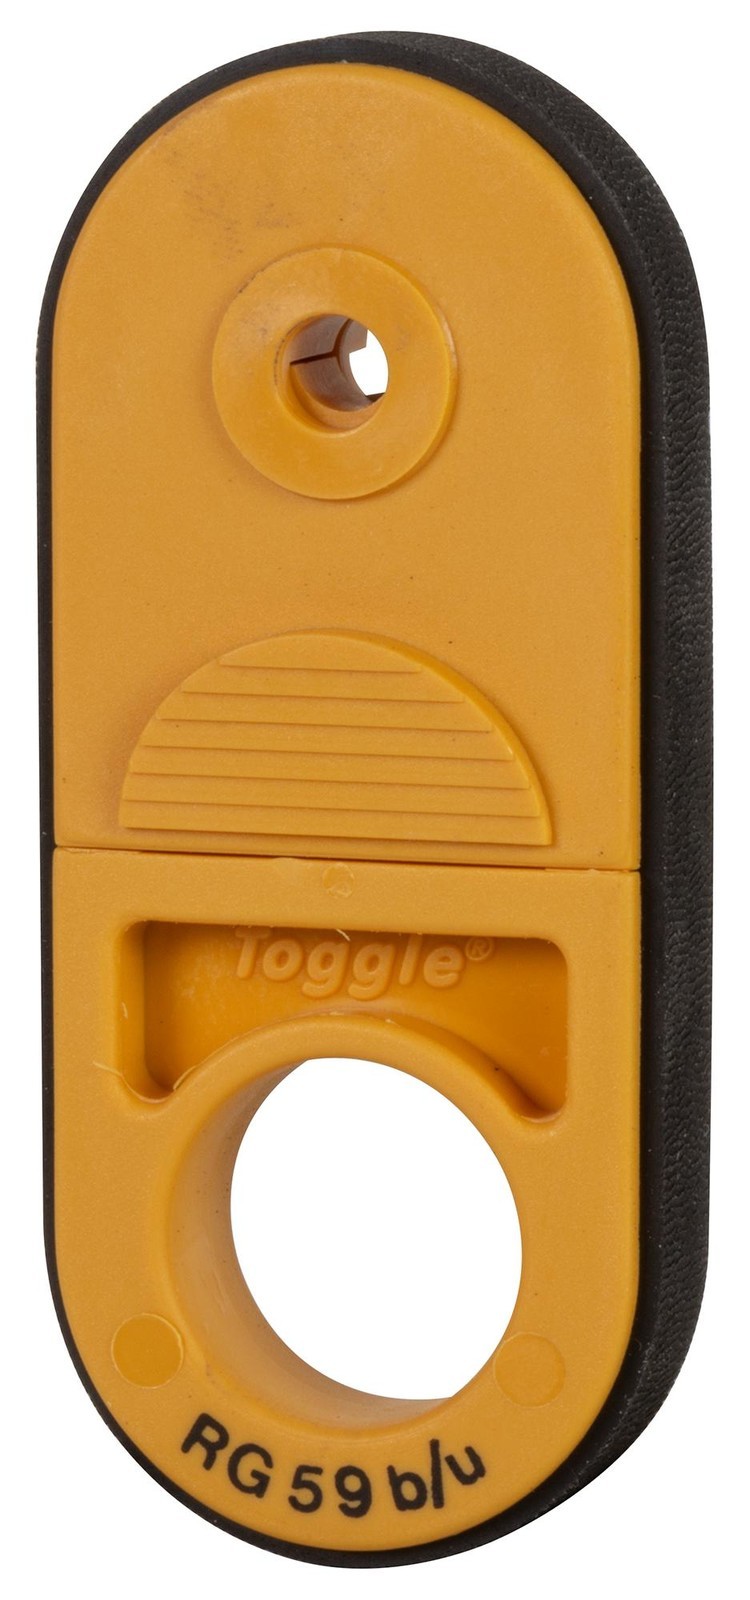 Toggle 10040 Coax Stripper Rg59